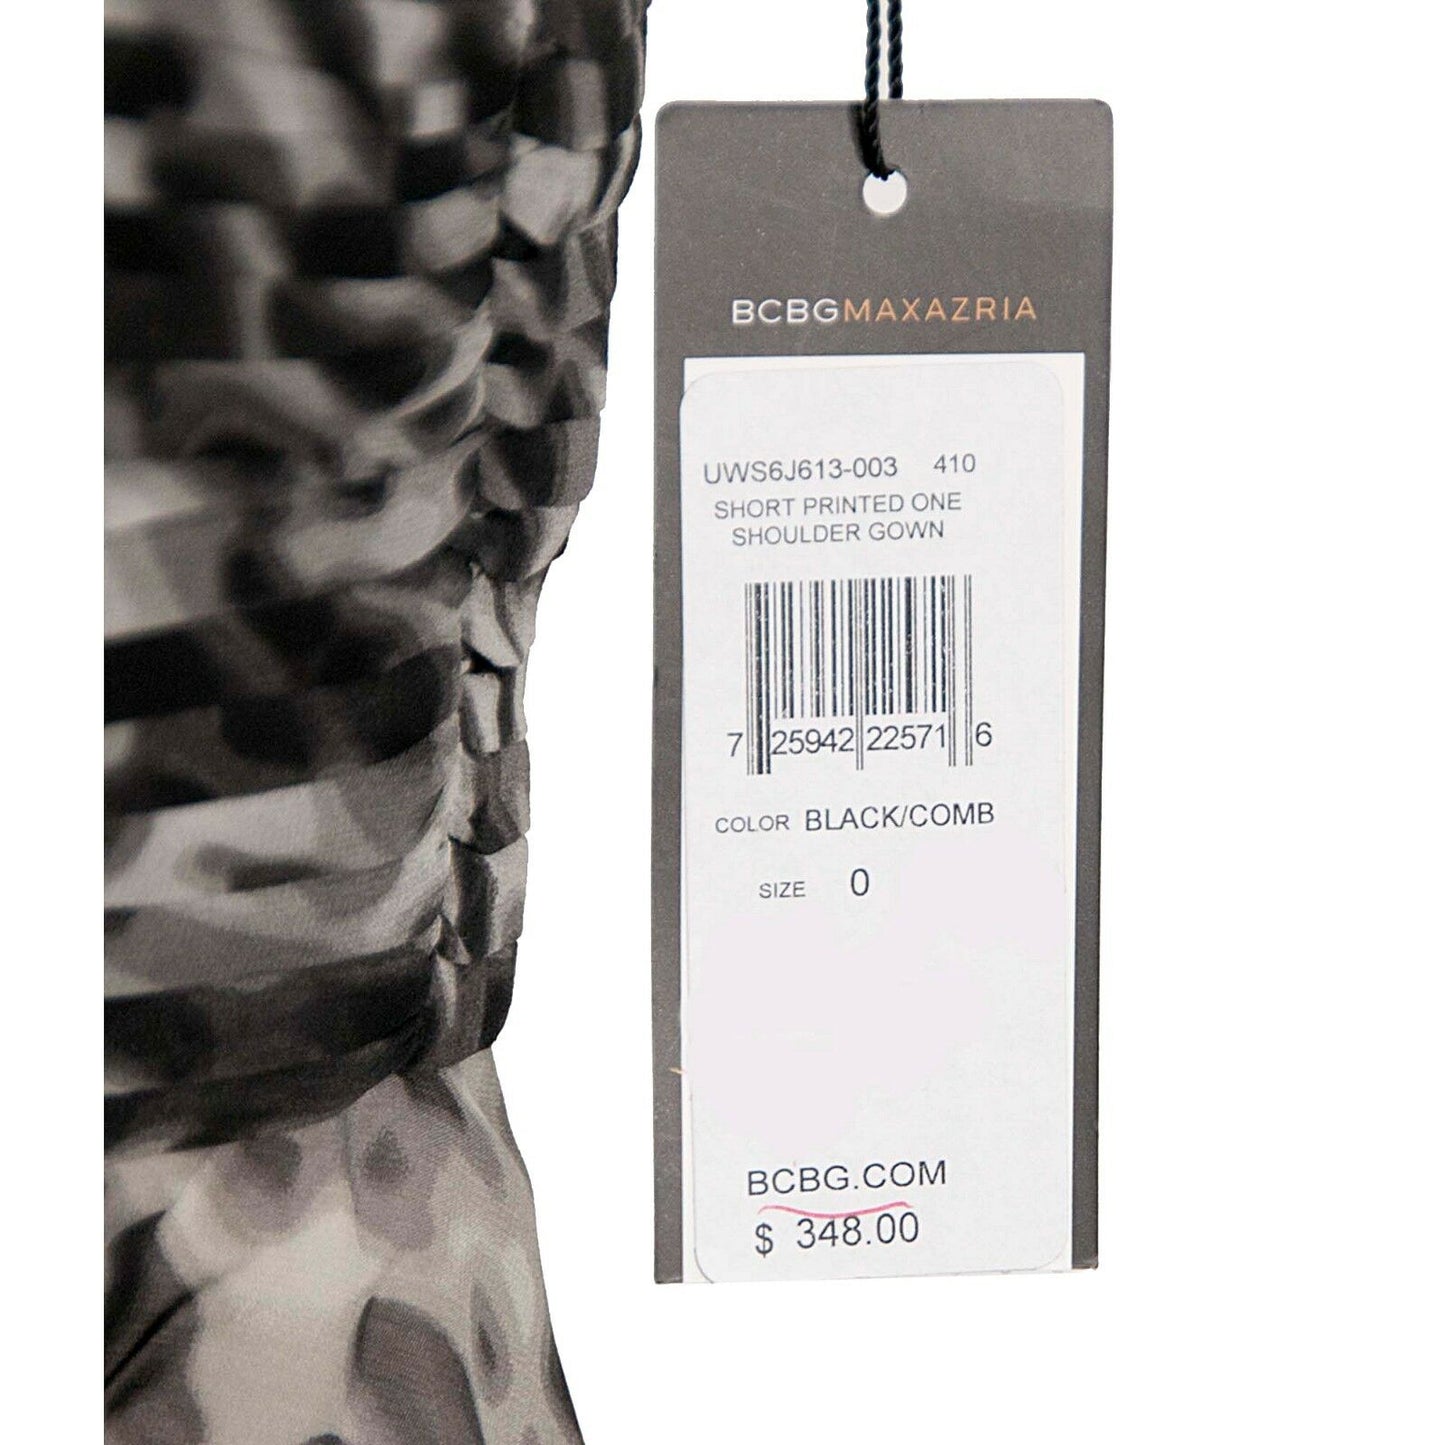 BCBG MAXAzria Silk One Shoulder Gray Gathered Party Cocktail $348 Dress NWT